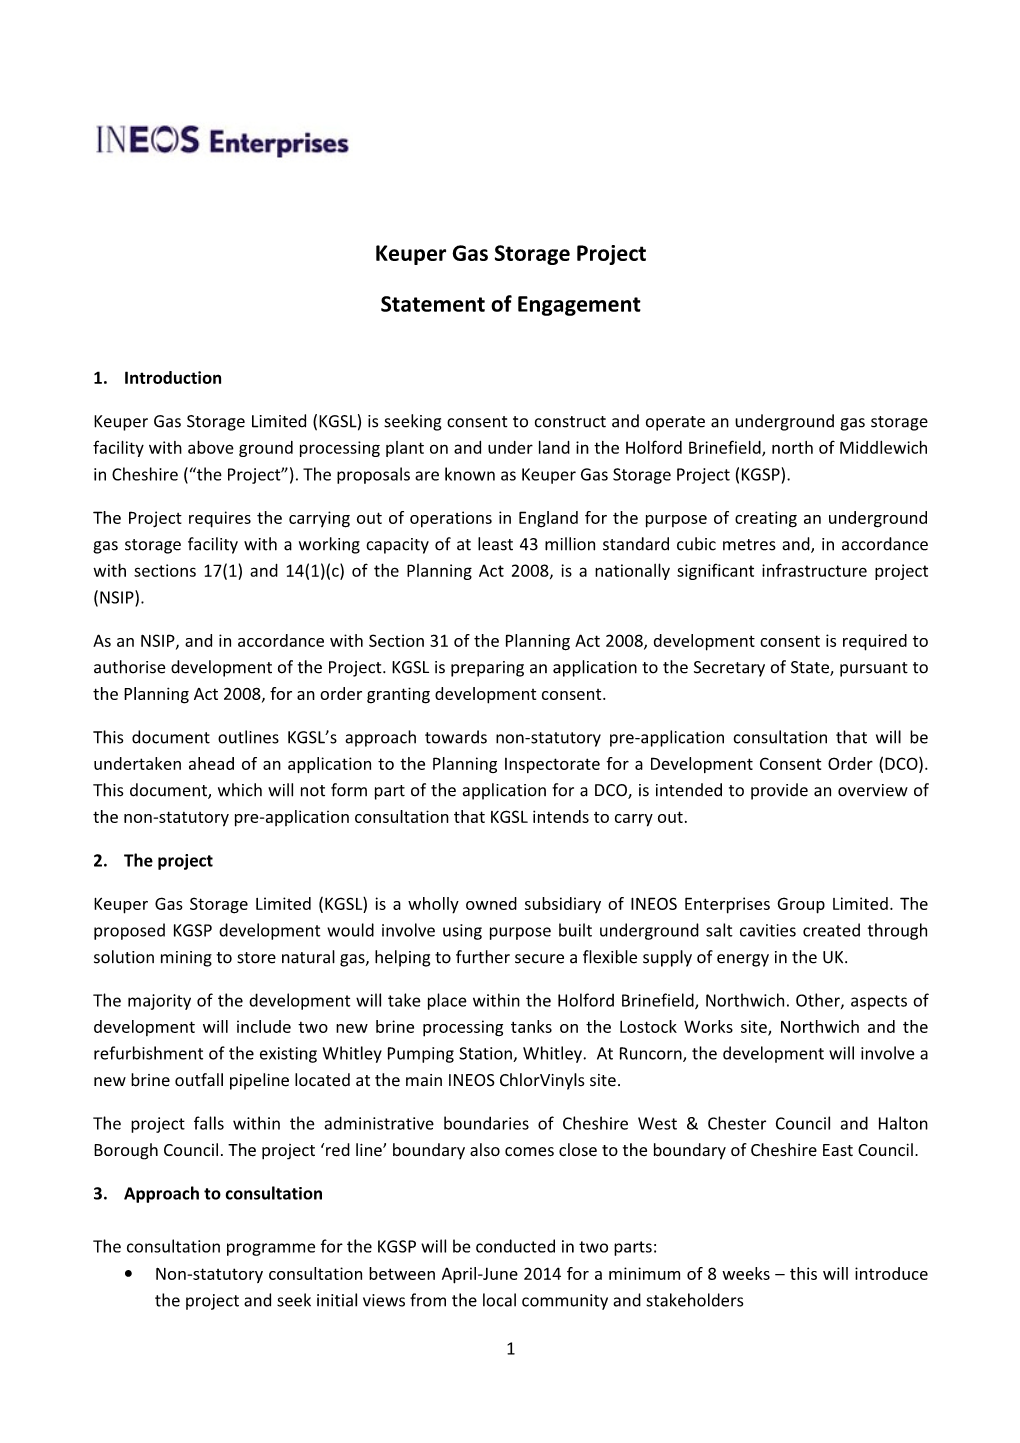 Keuper Gas Storage Project Statement of Engagement